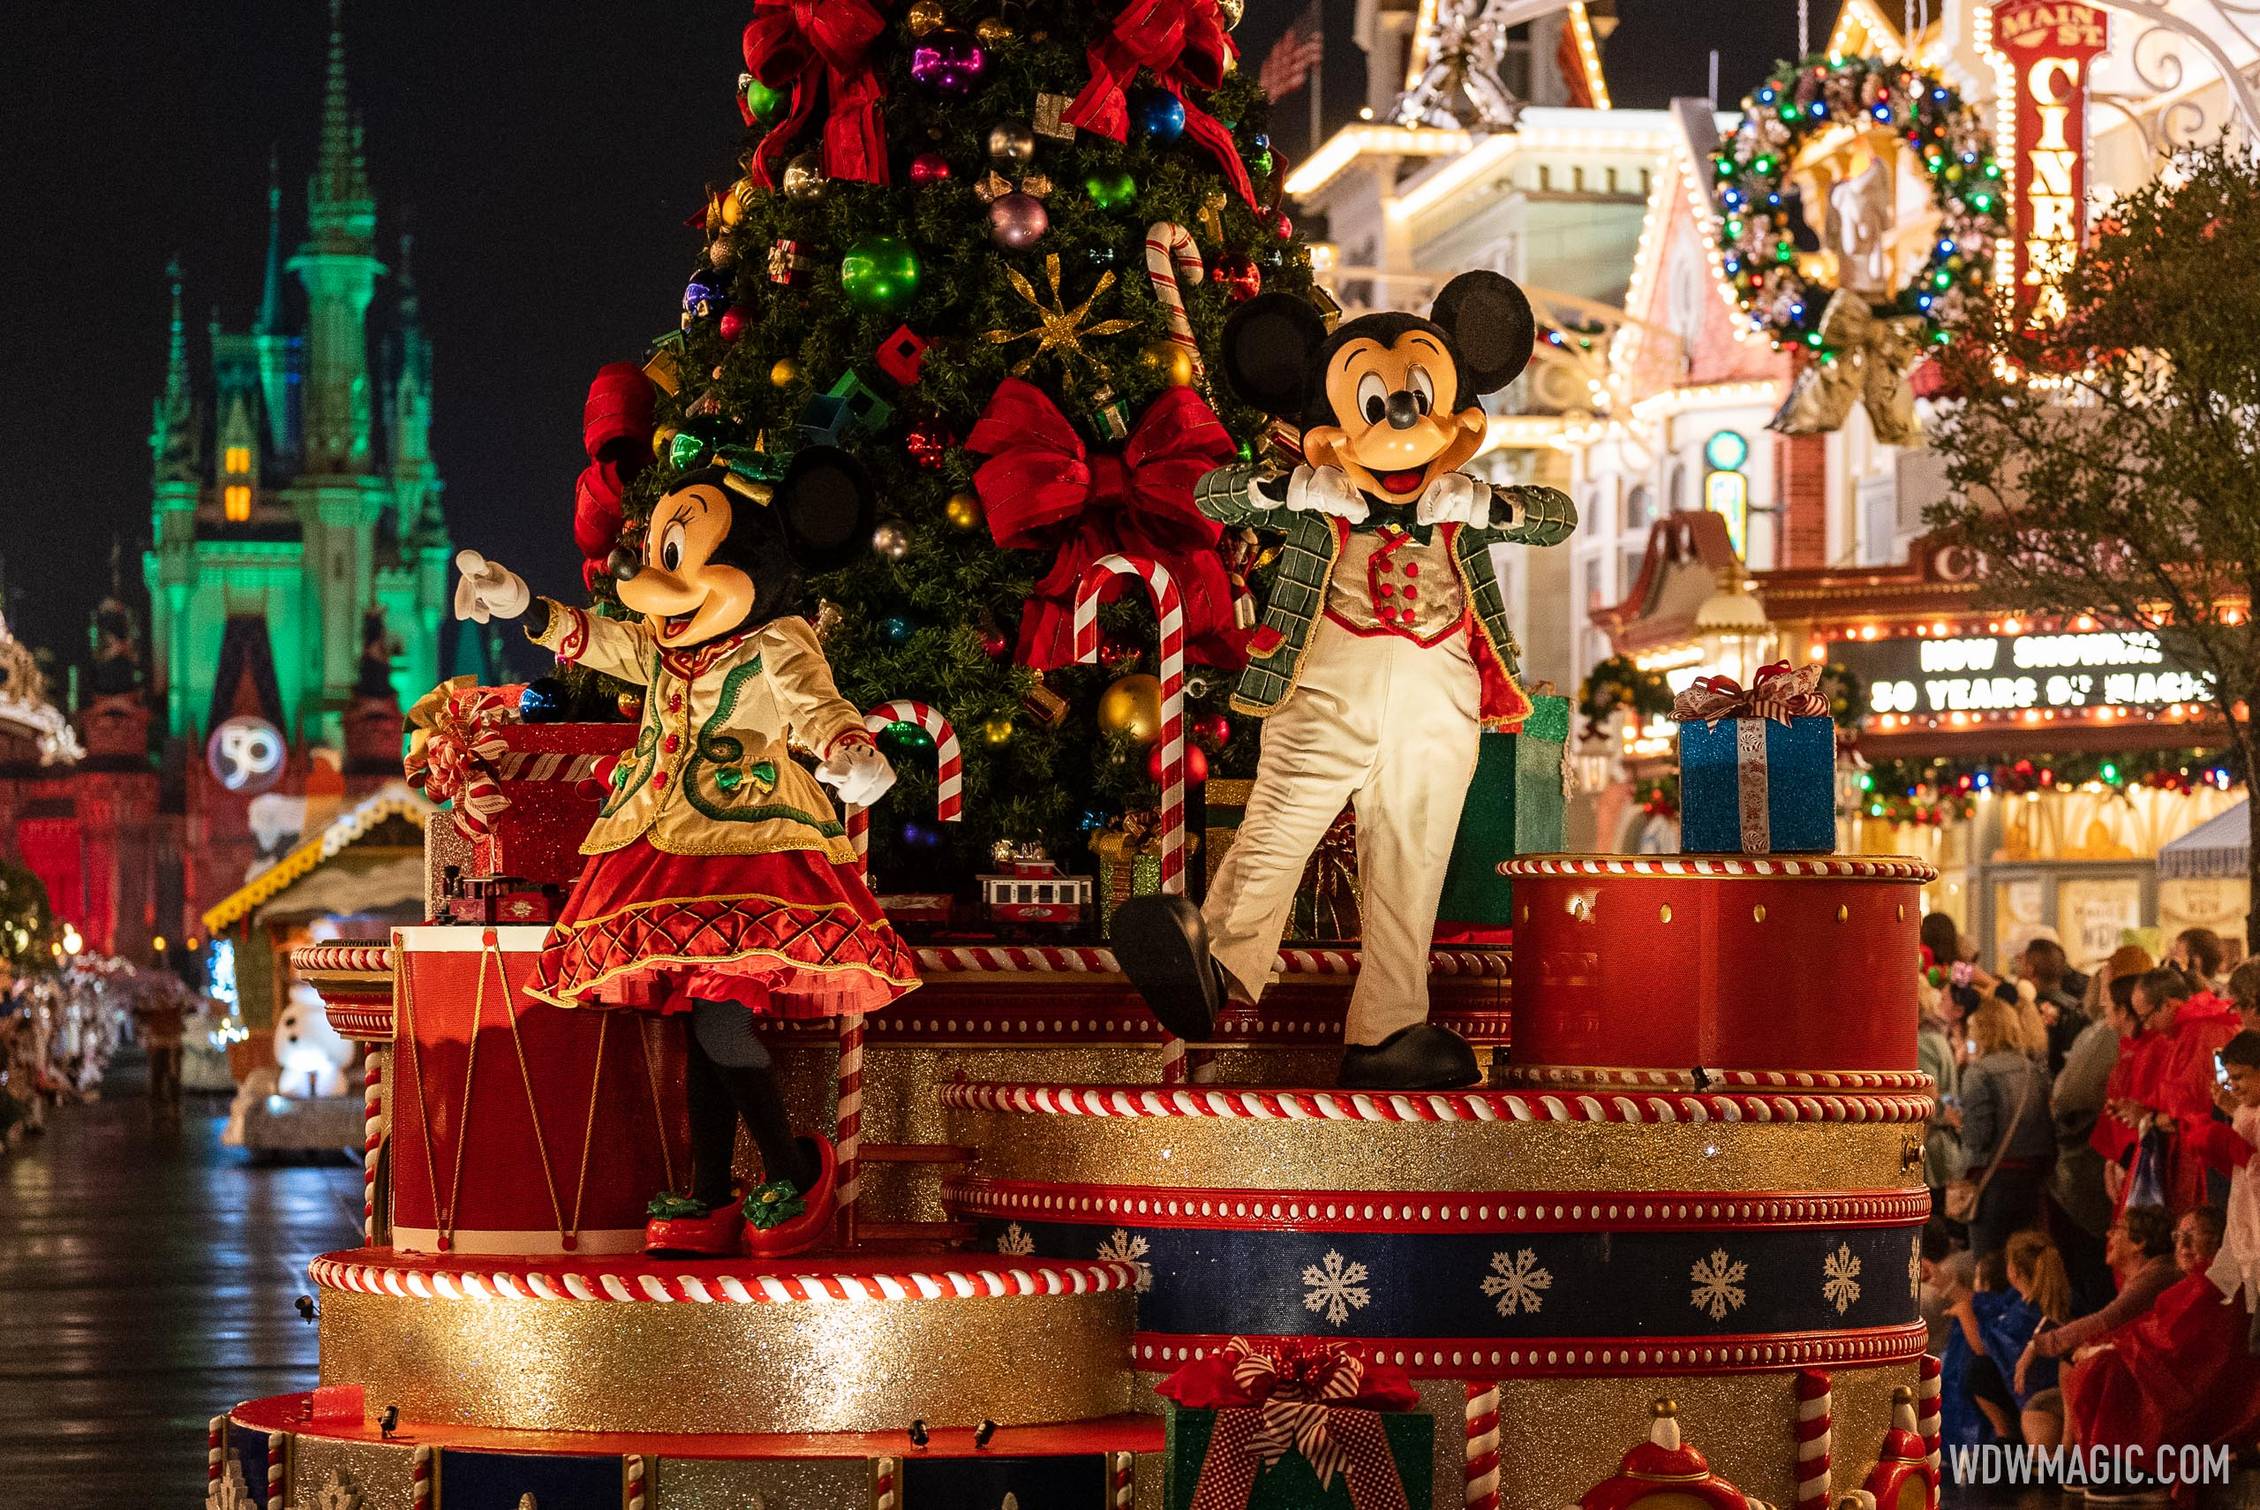 Mickeys-Once-Upon-a-Christmastime-Parade_Full_49255.jpg